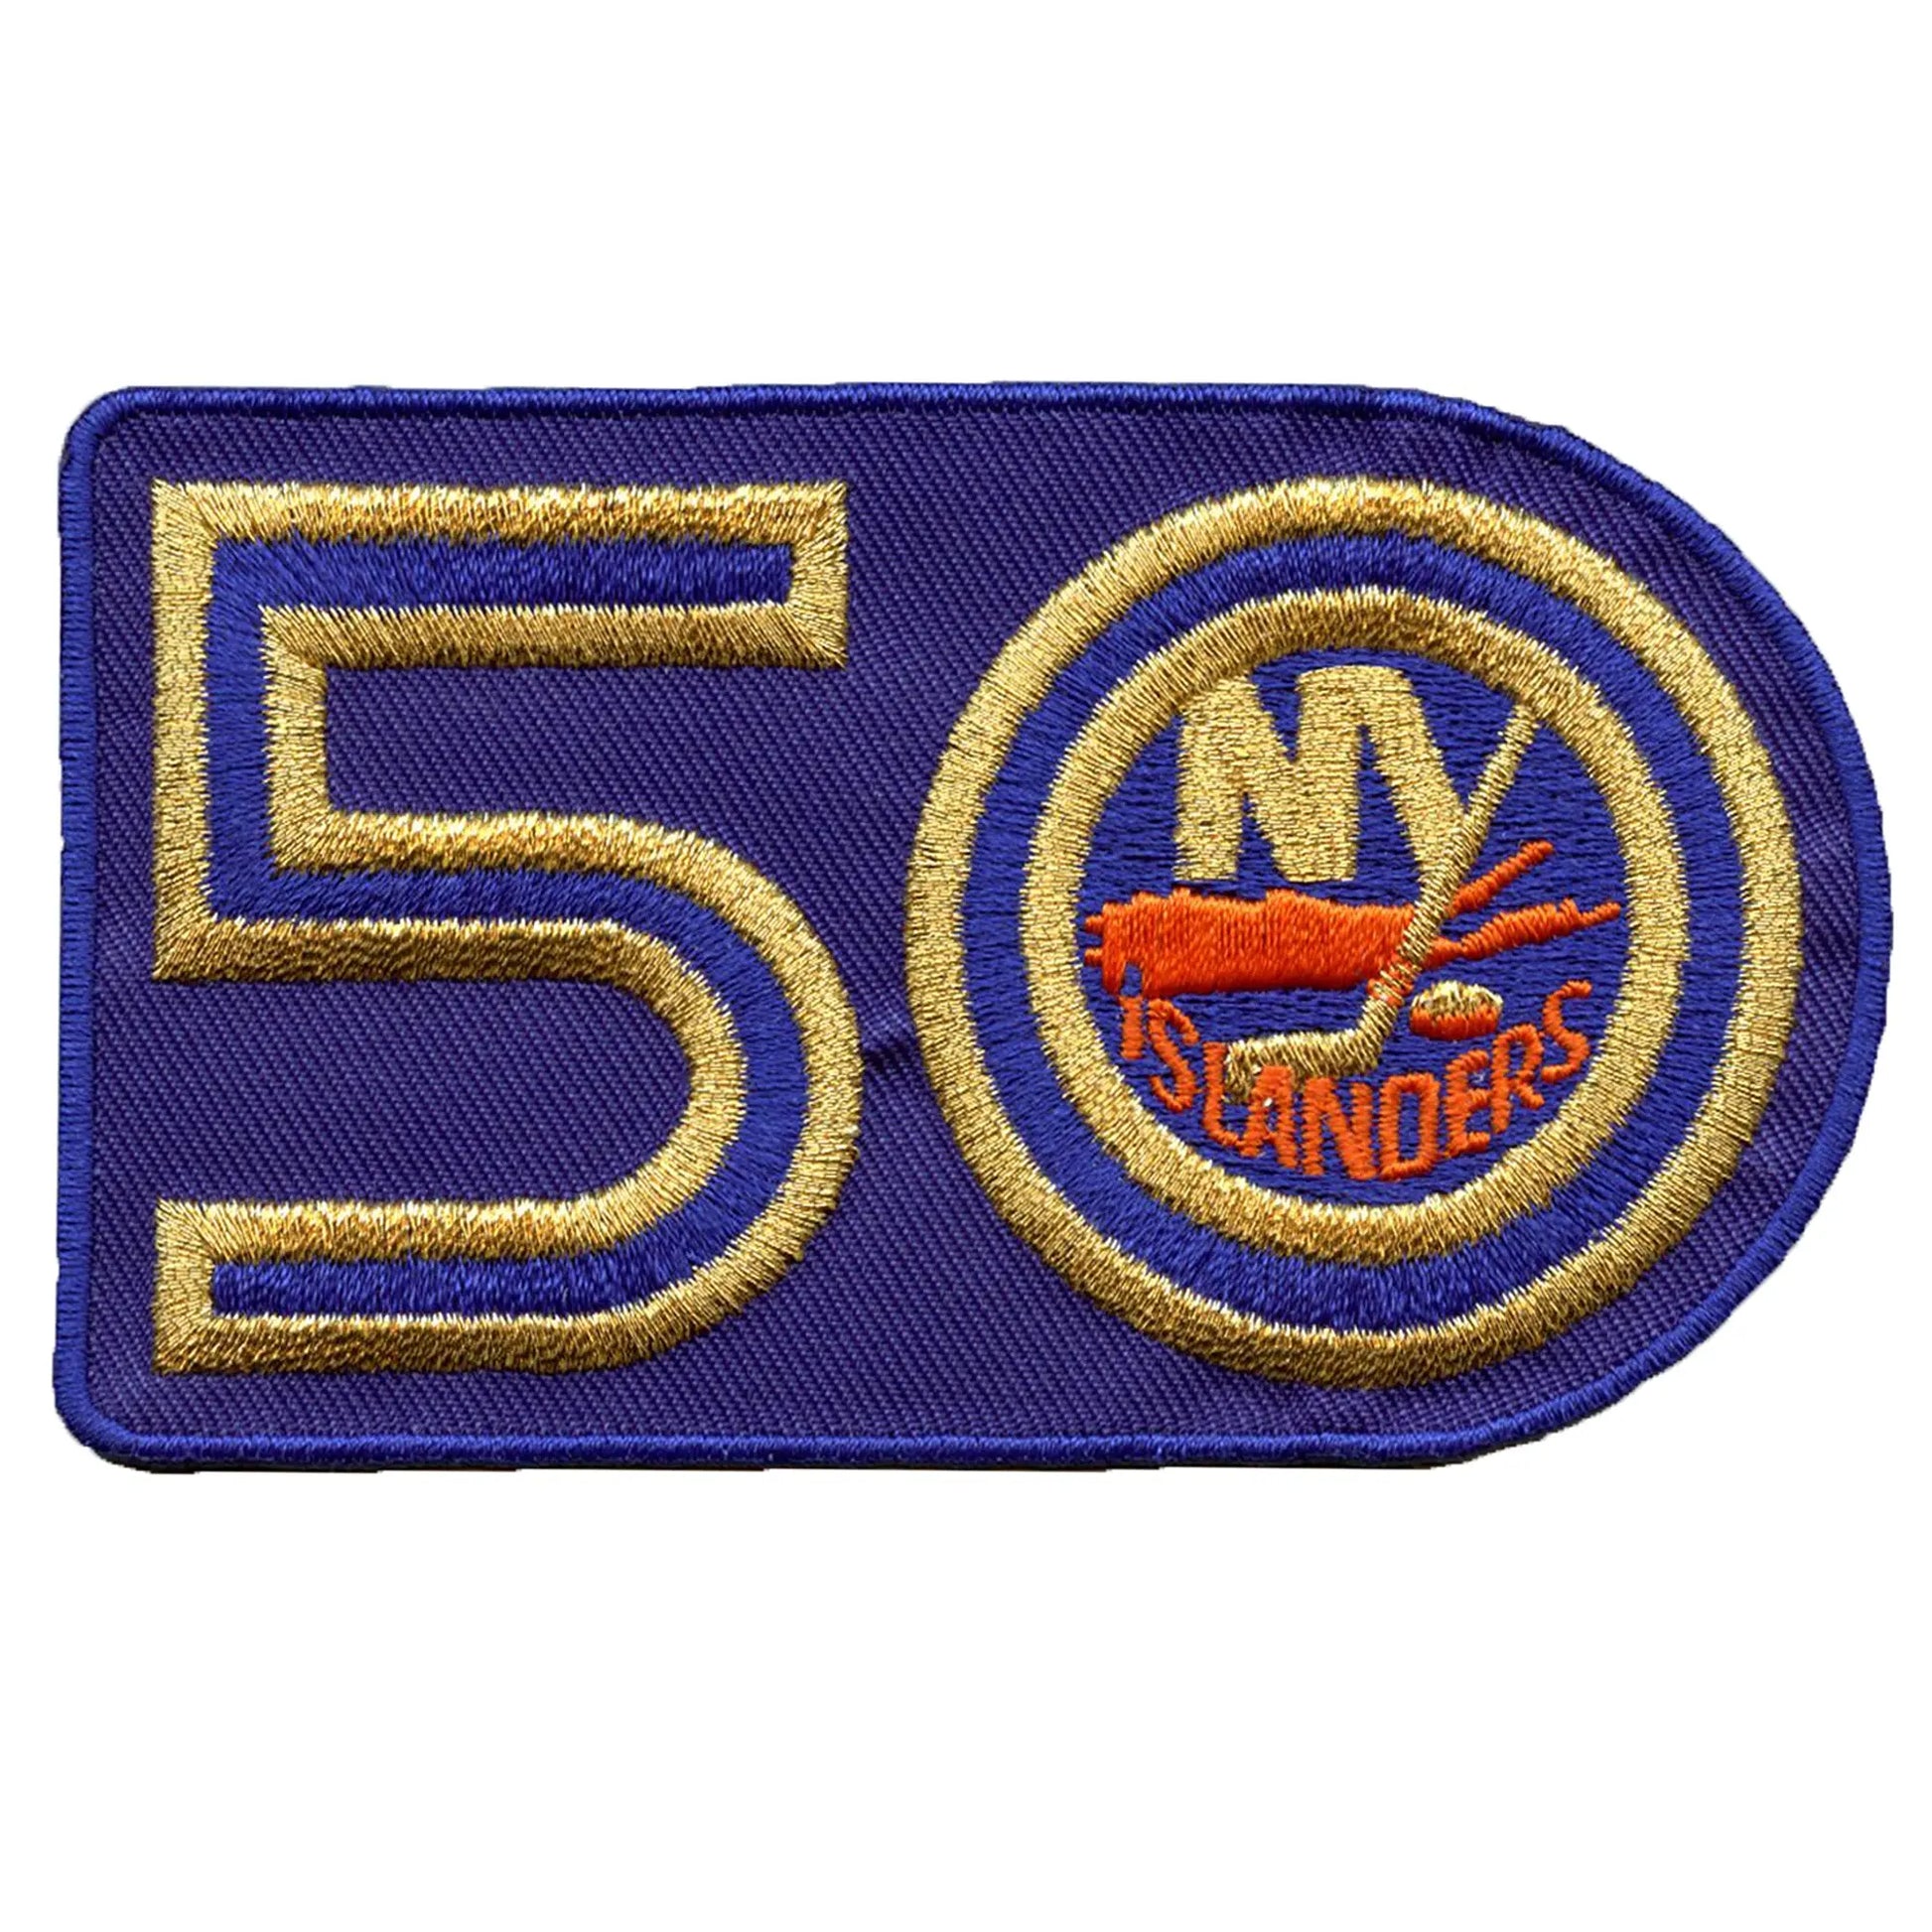 50th Anniversary merchandise has - New York Islanders